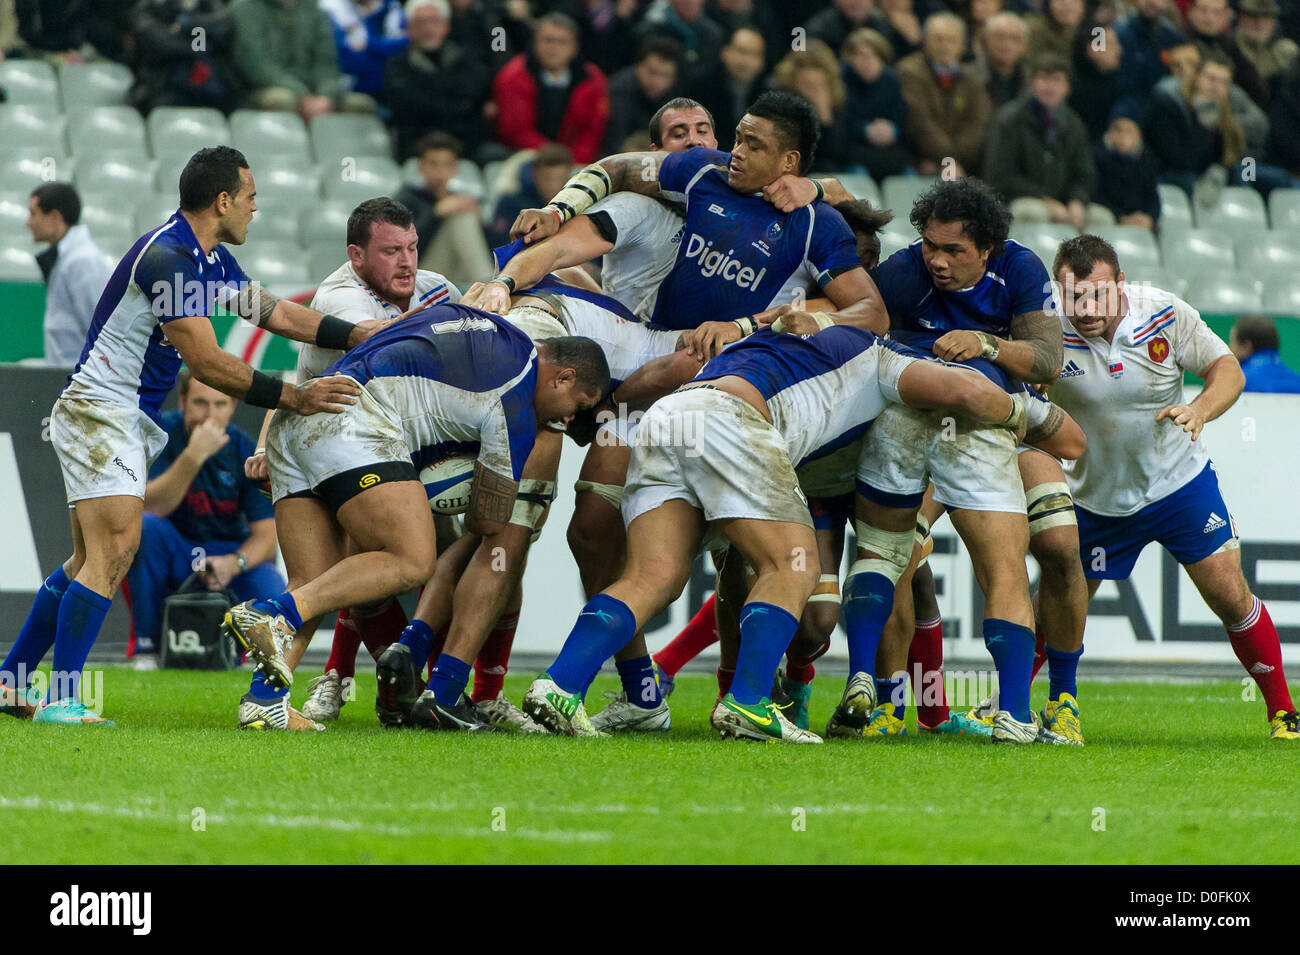 2012-11-24. Saint Denis (France). Rugby test match France (22) vs Samoa (14). Sakaria Taulafo (Samoa) carries the bal during a maul. Photo Frédéric Augendre Stock Photo